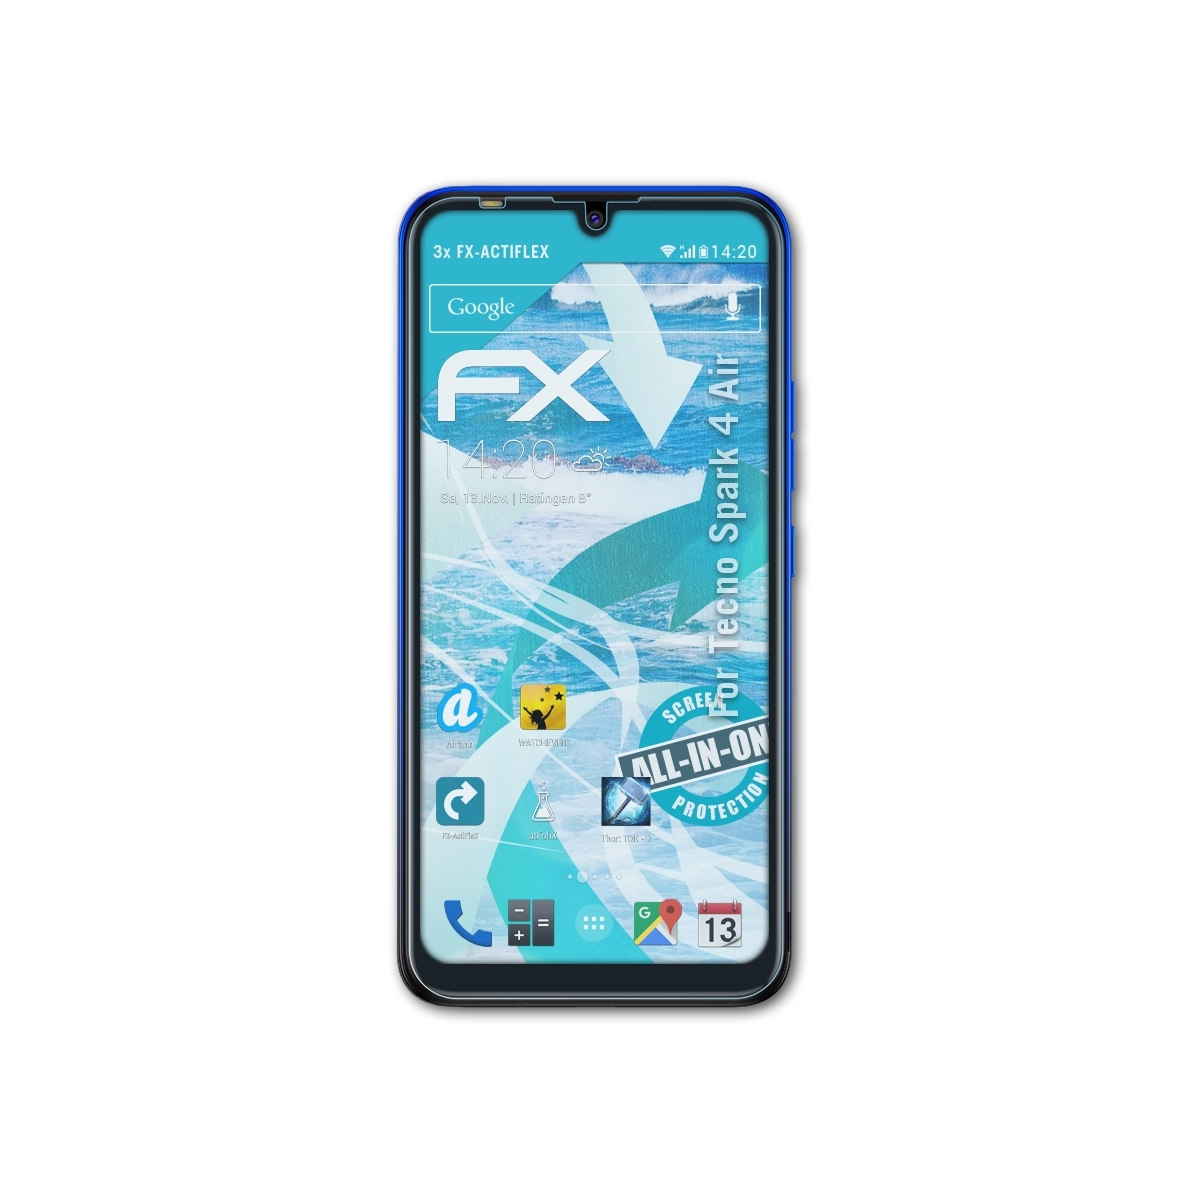 Displayschutz(für Spark 4 Air) FX-ActiFleX 3x ATFOLIX Tecno